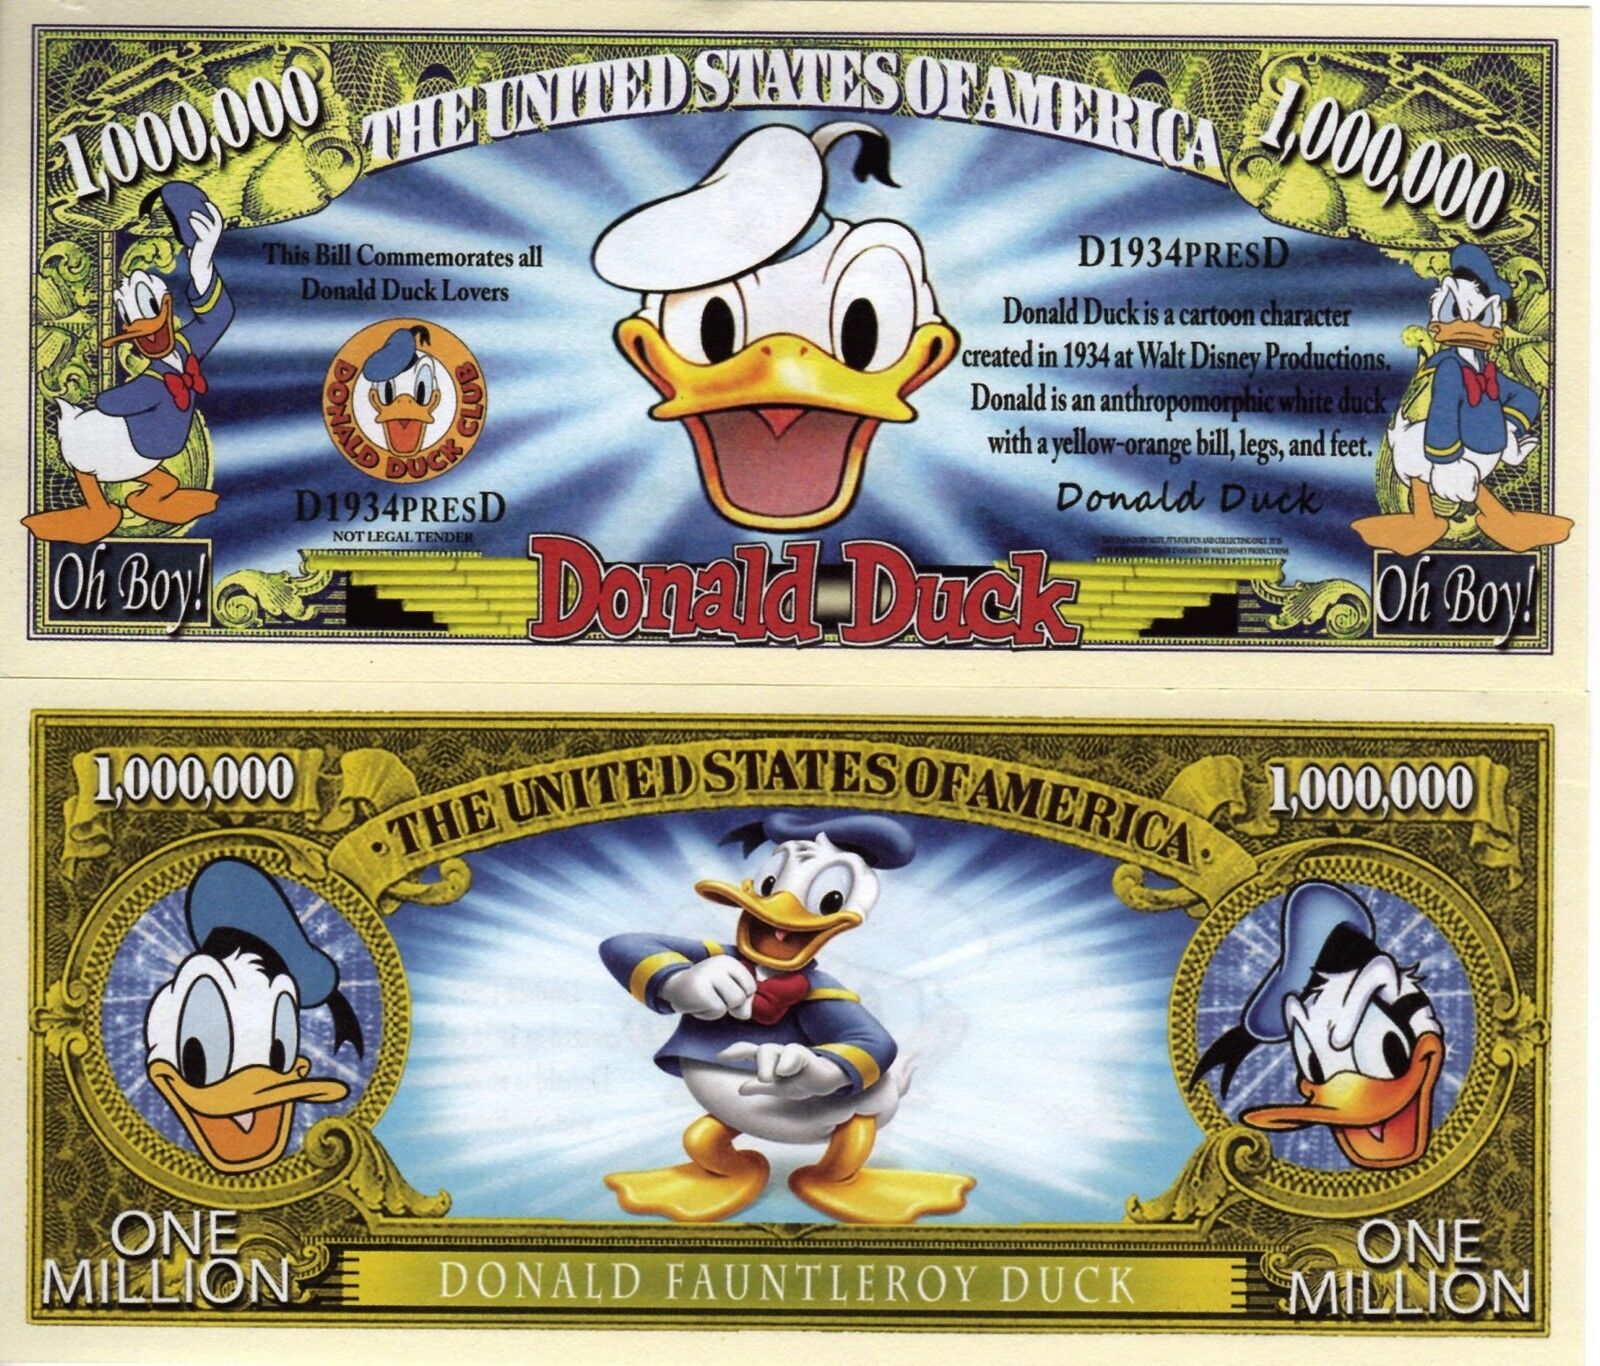 Donald Duck - Disney Character Million Dollar Novelty Money | eBay